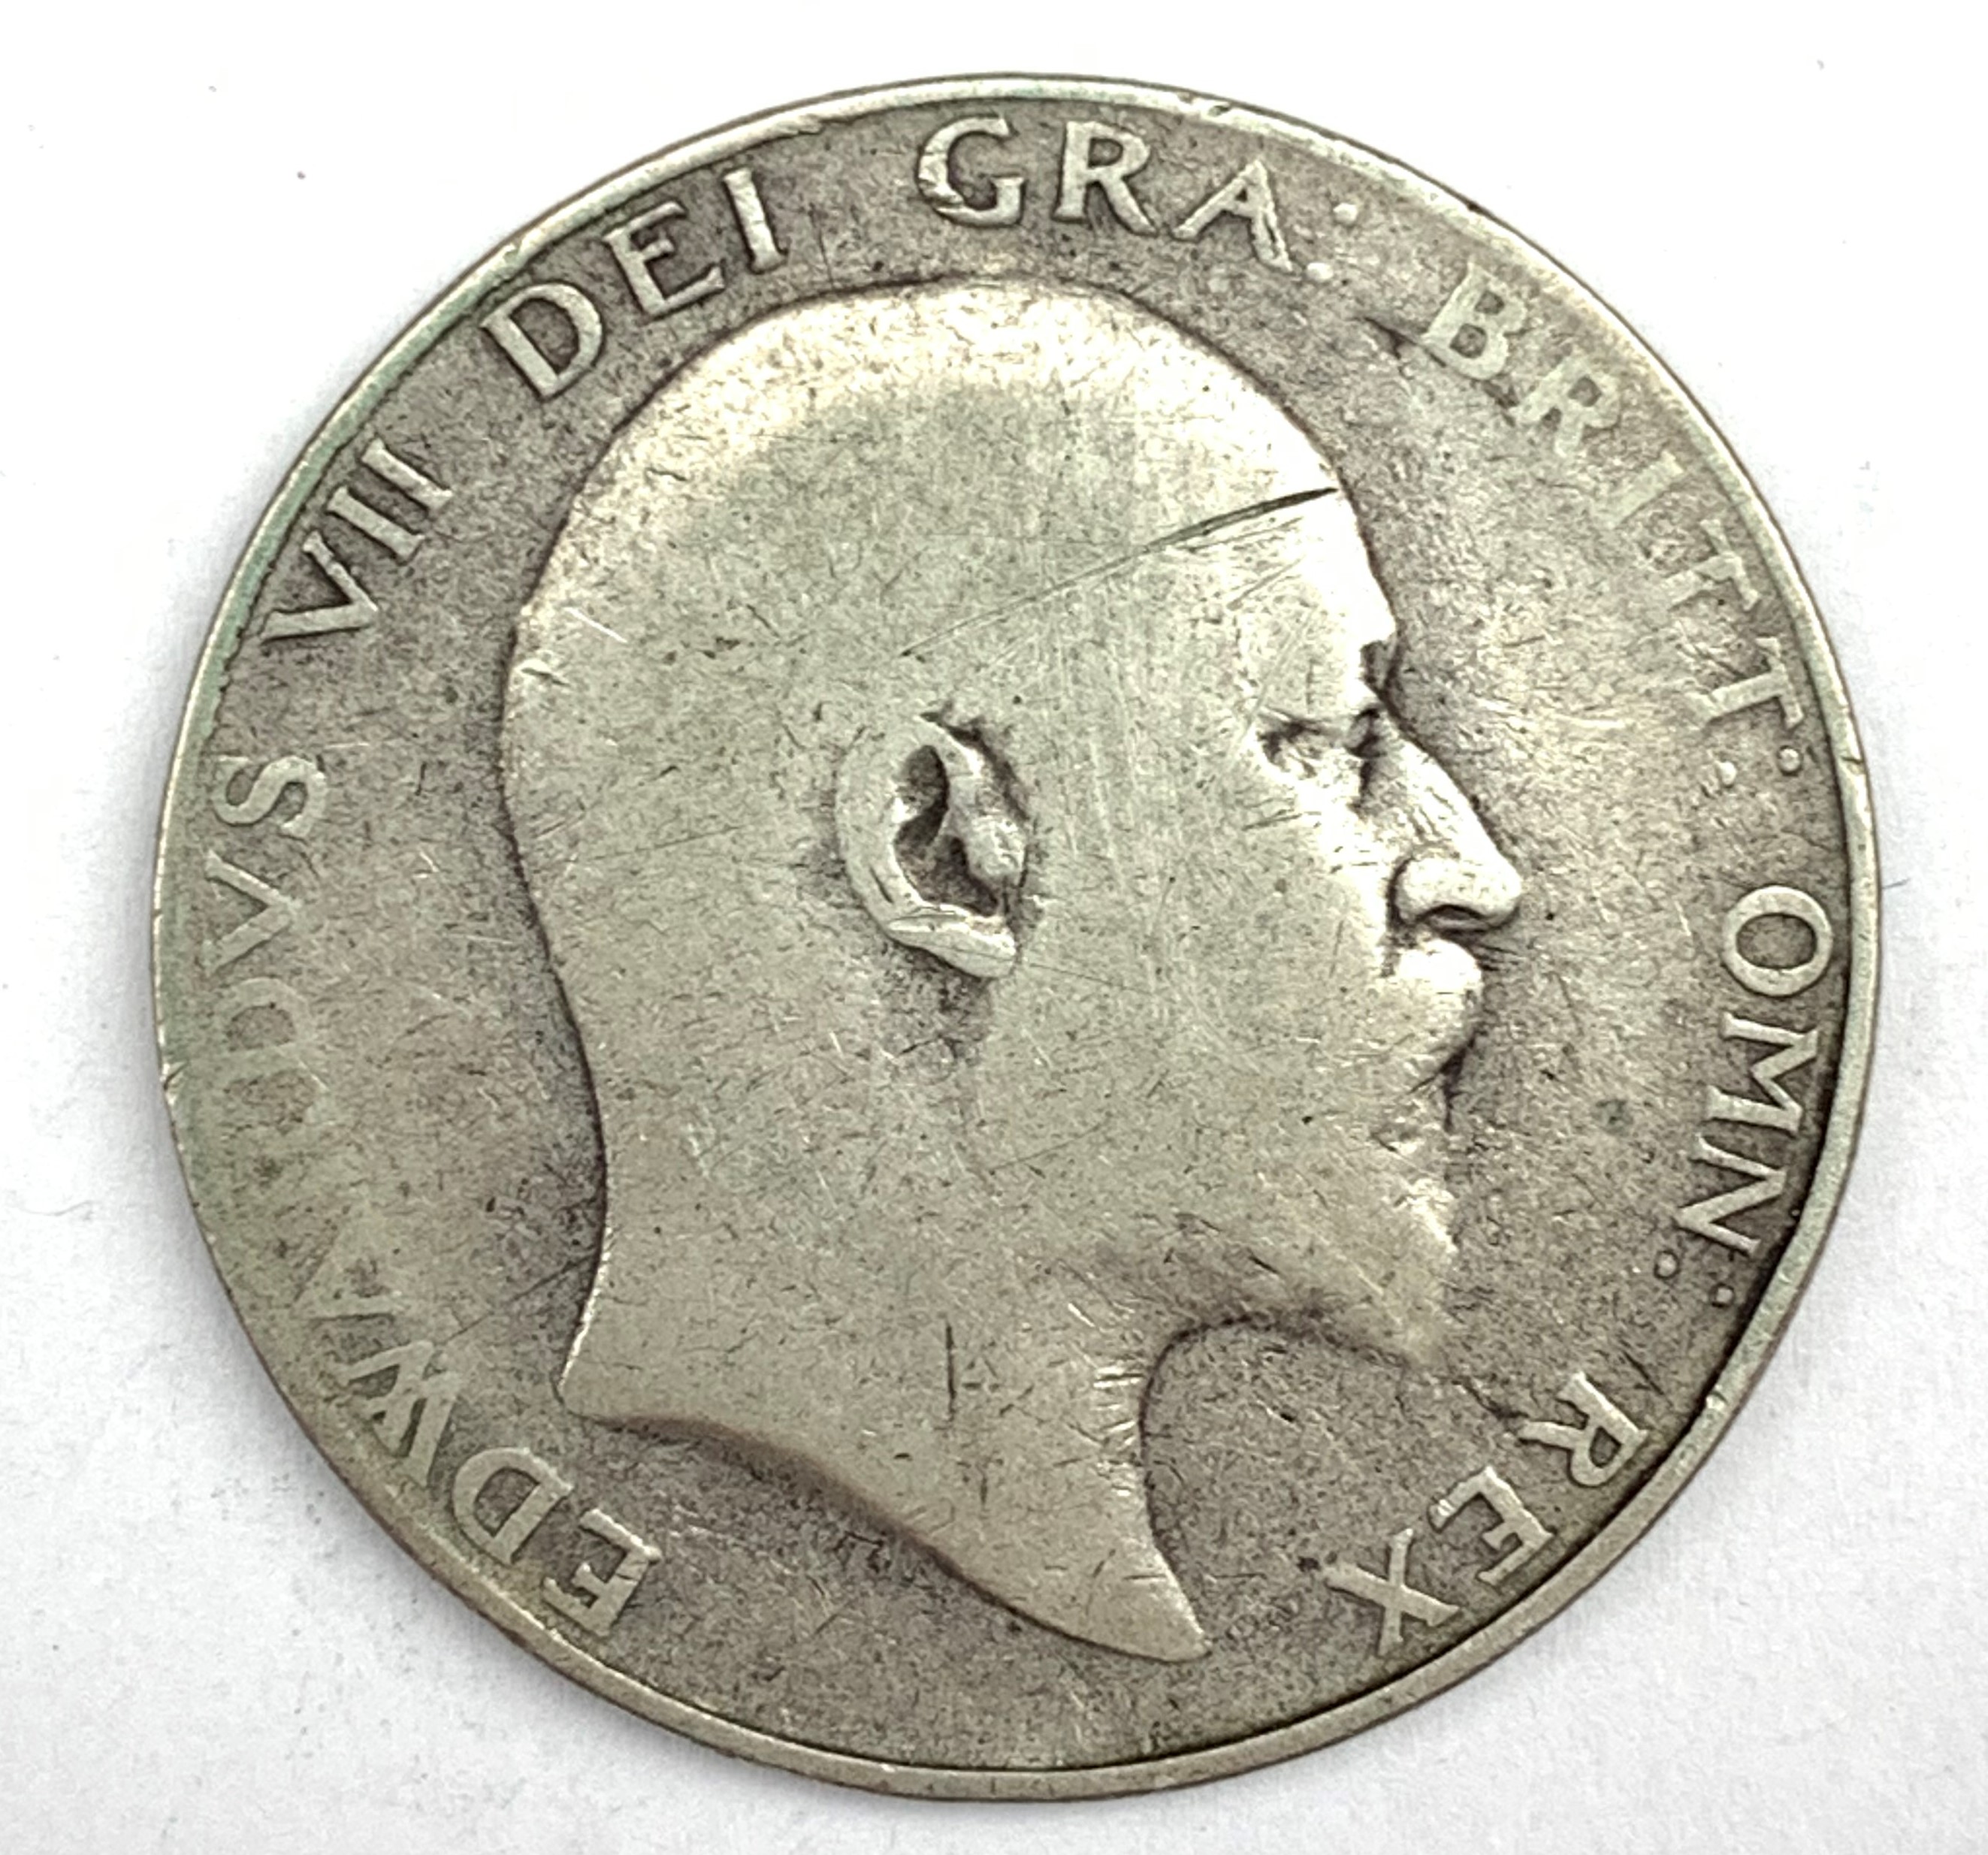 King Edward VII 1905 half crown coin